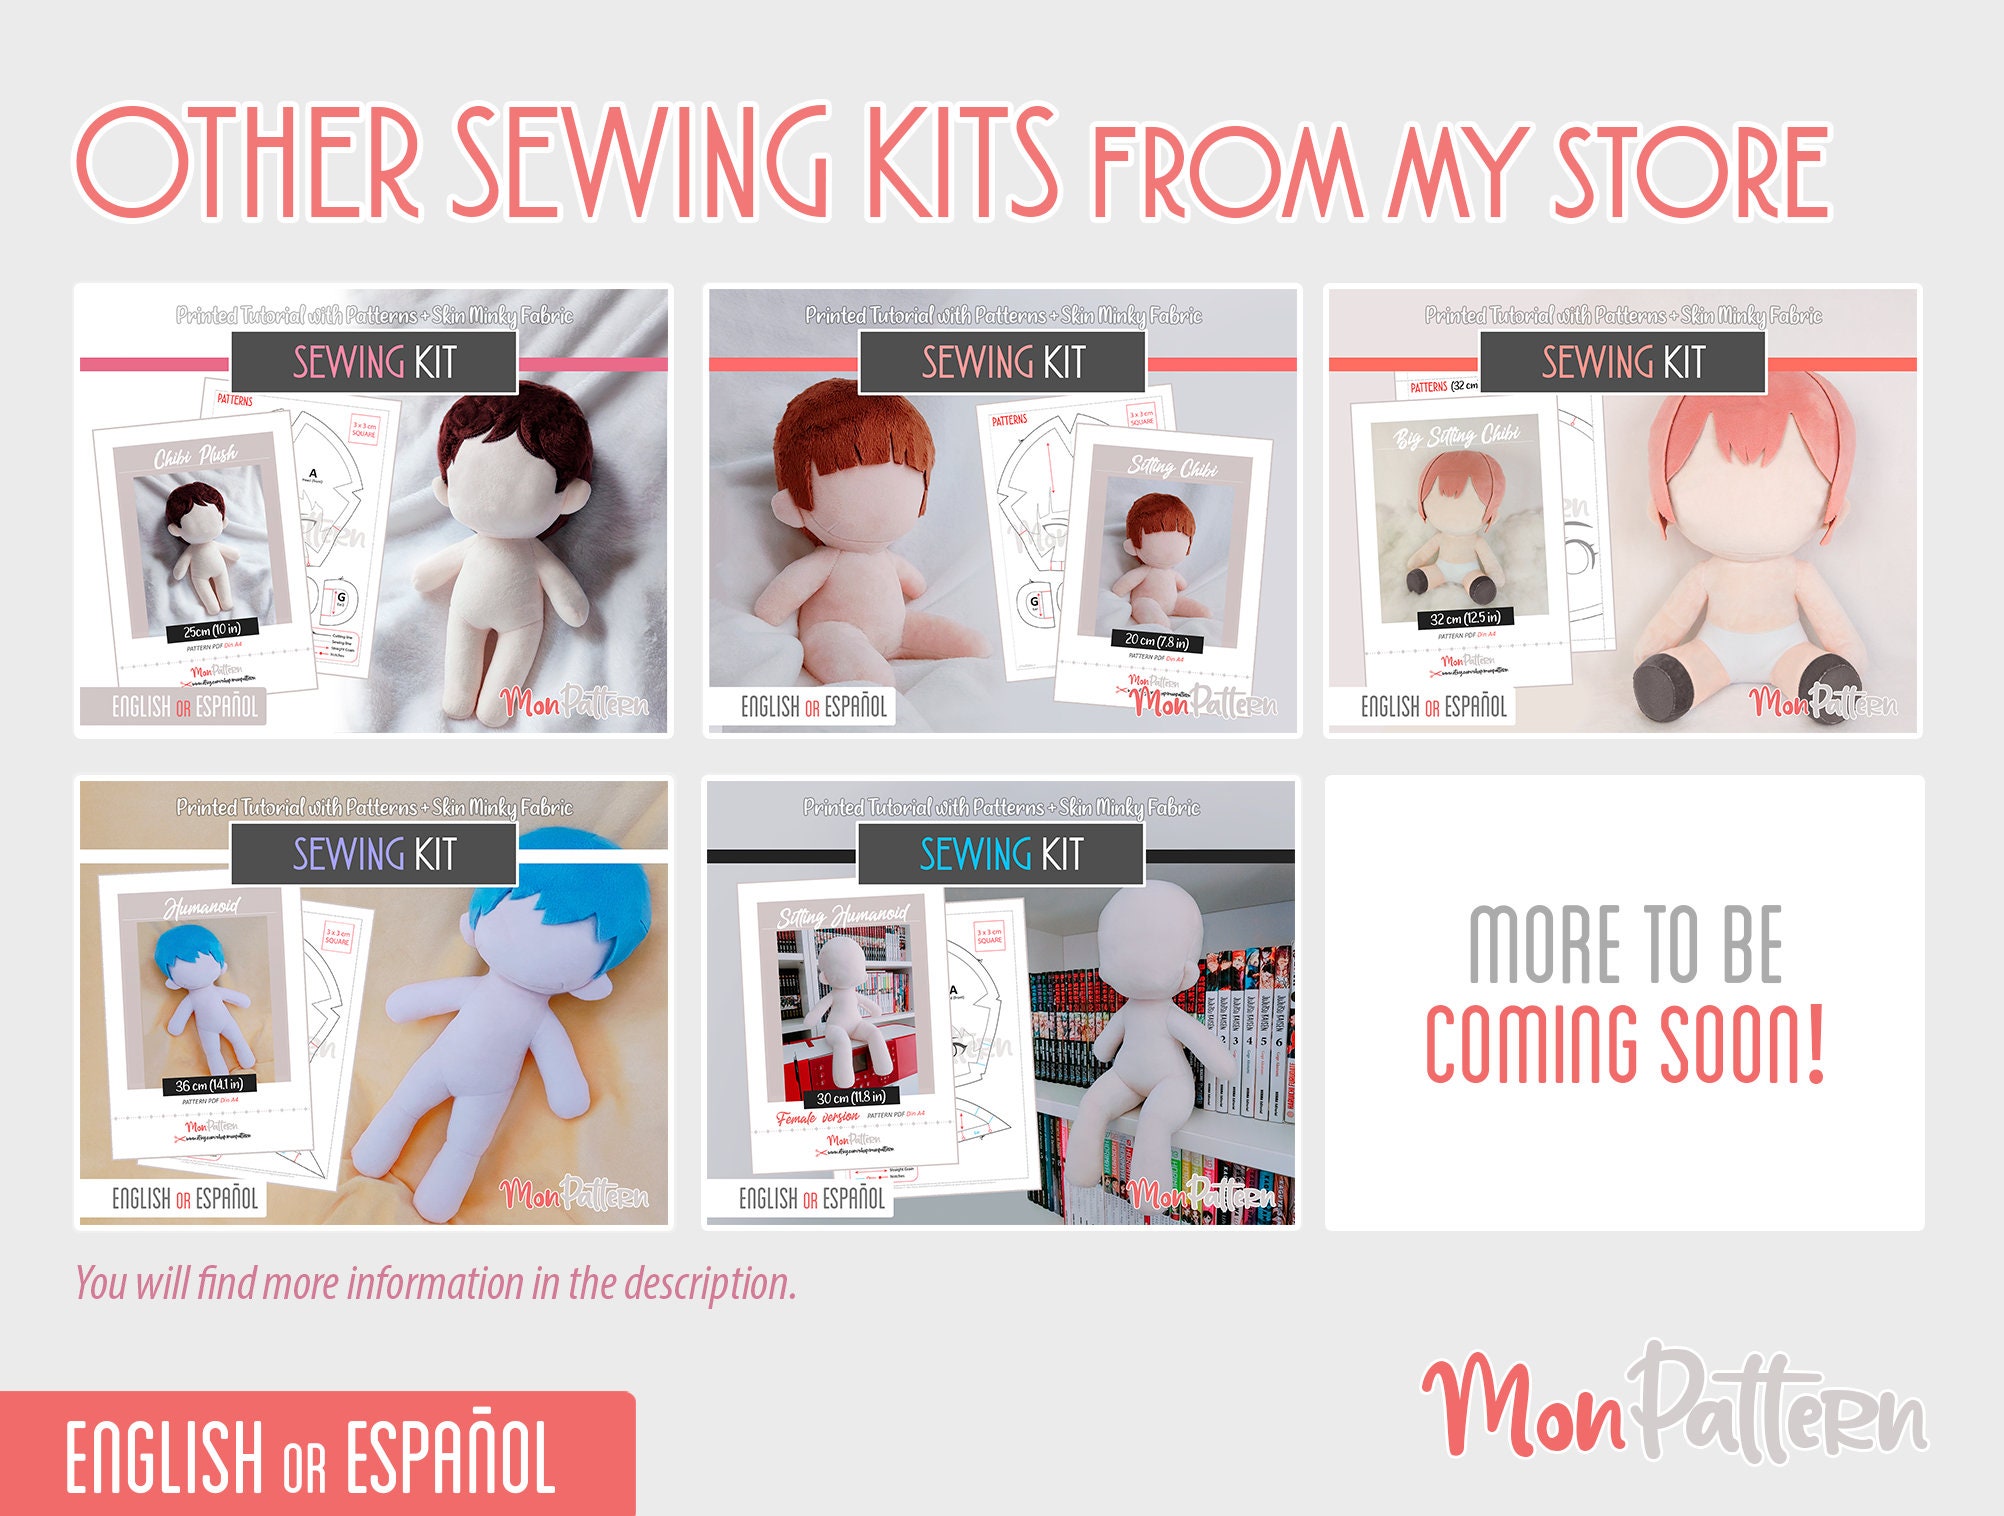 CHIBI Sewing Kit Human Doll Plush 25 Cm minky Fabric Sewing Pattern PRINTED  Spanish or English Instructions Include Plush Fabric 